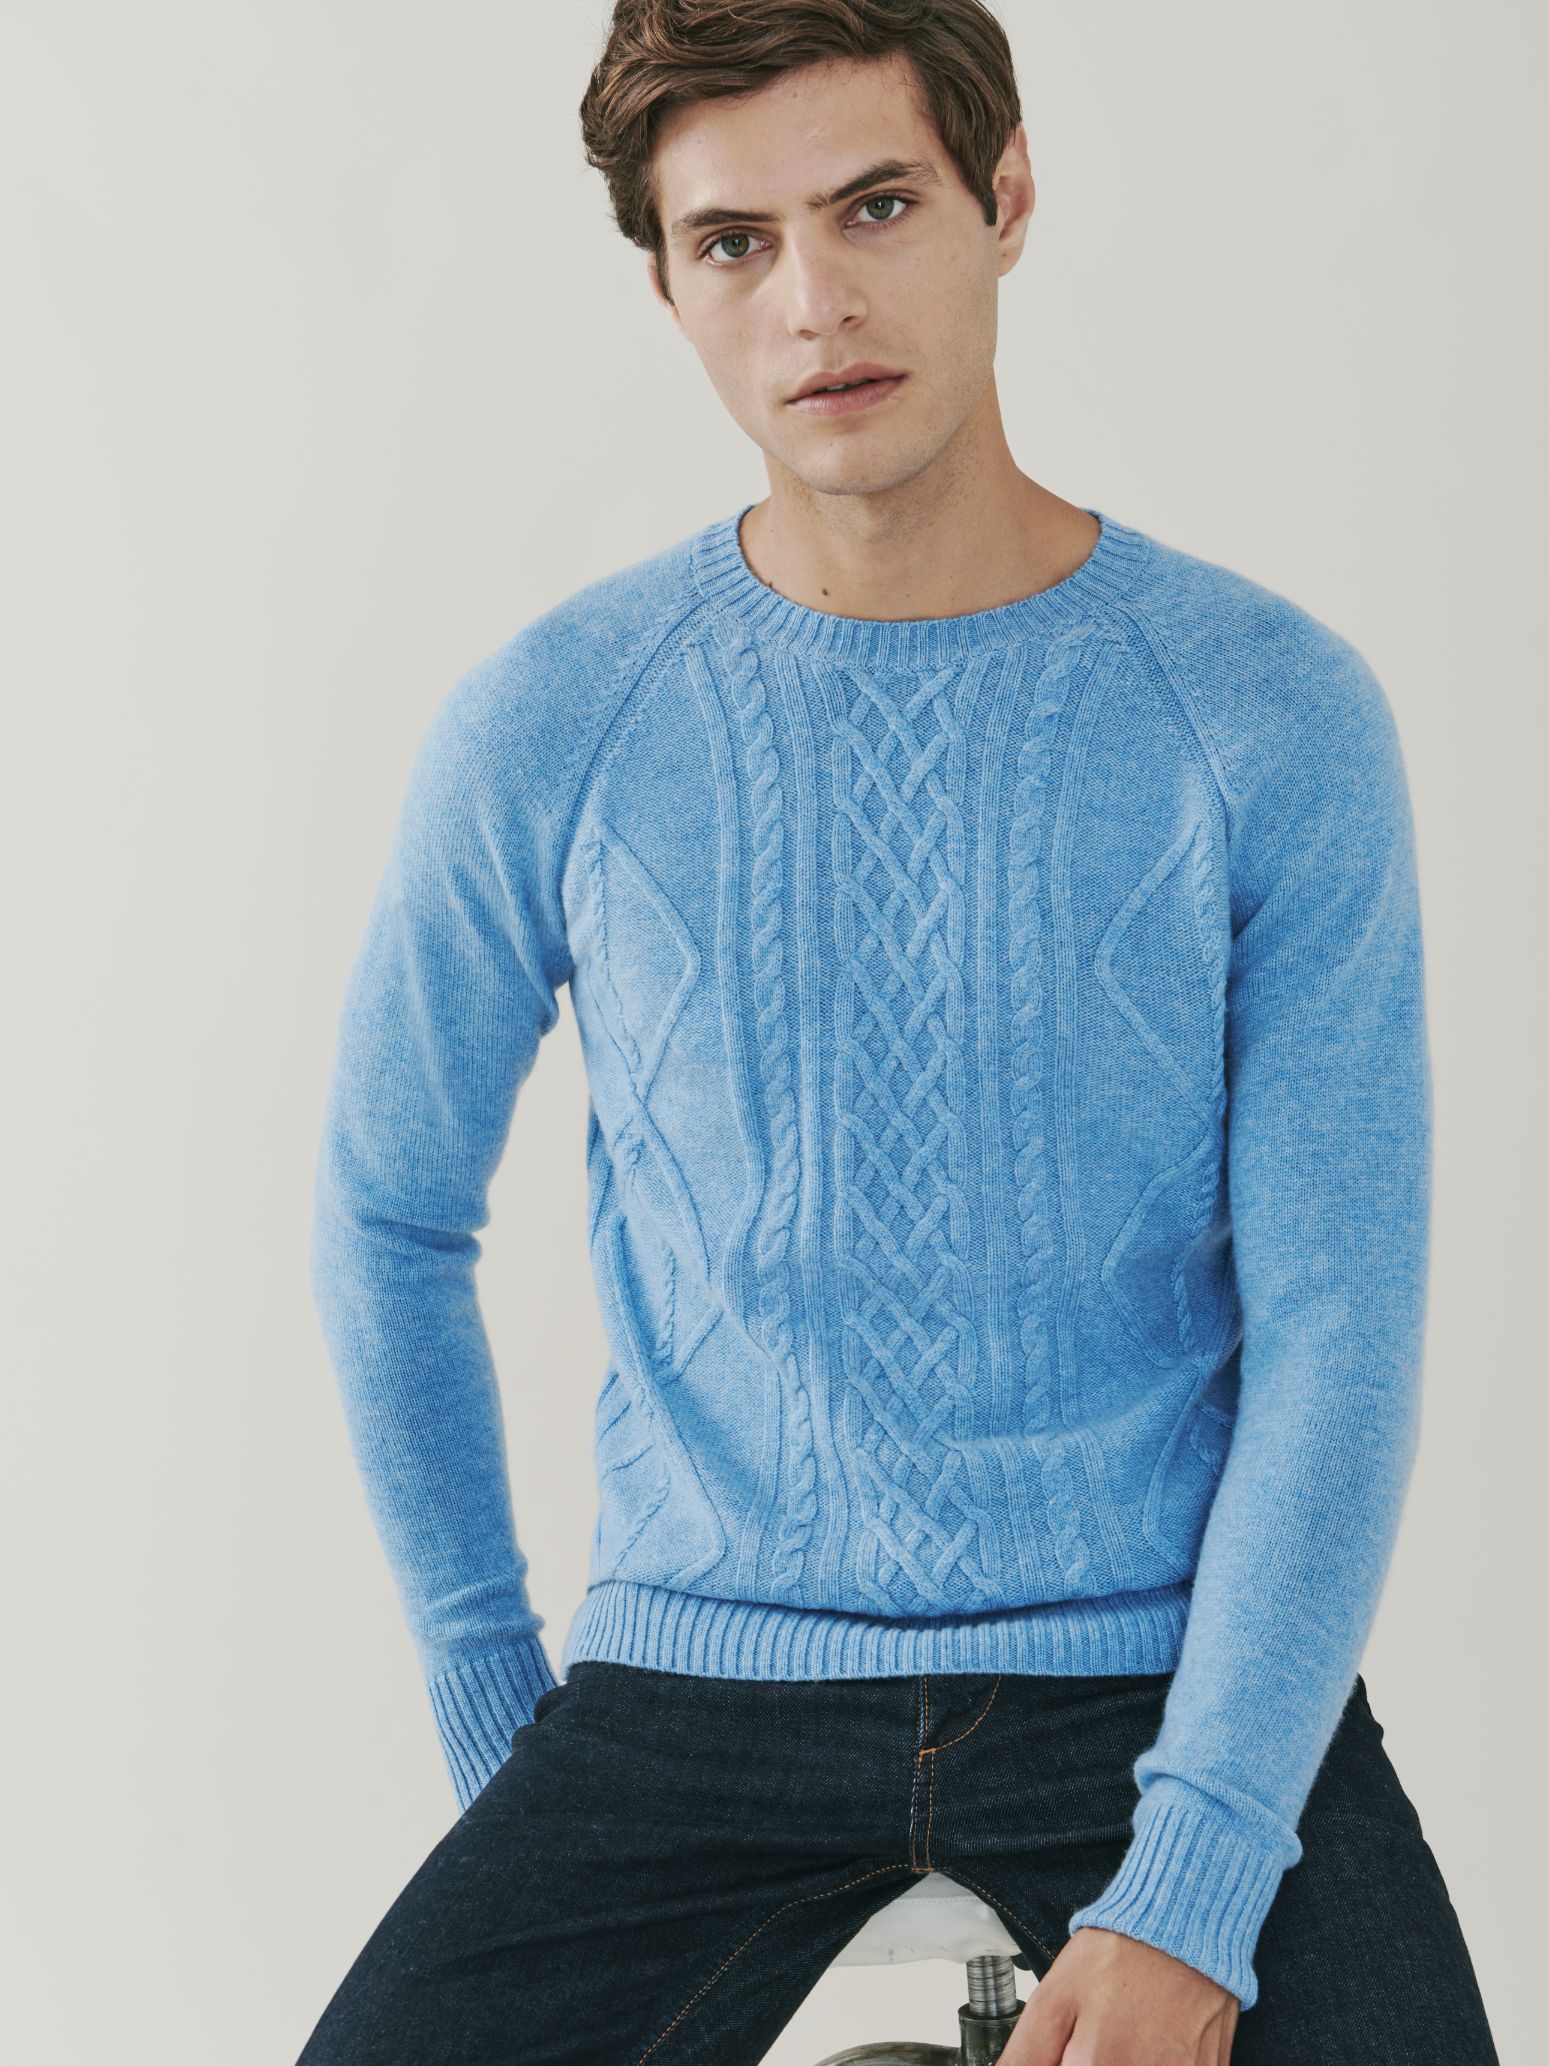 Mens cable knit cashmere crew neck sweater soft blue